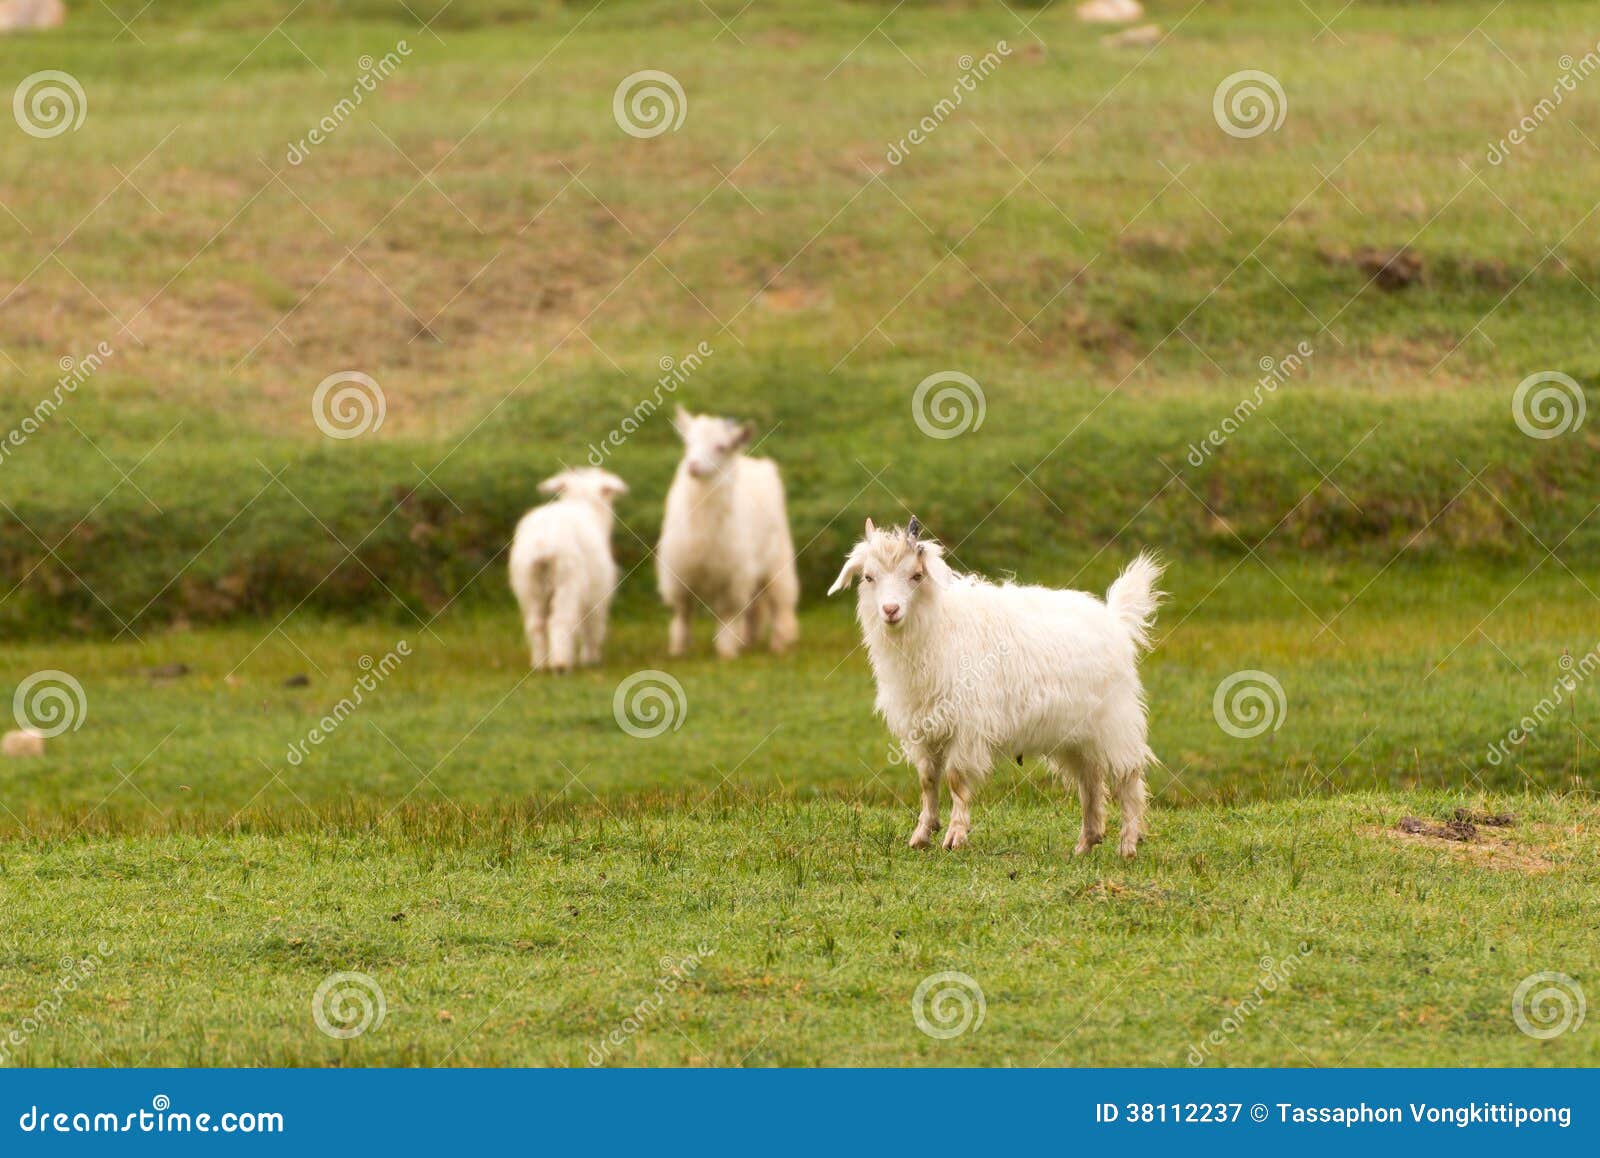 white pashmina goats